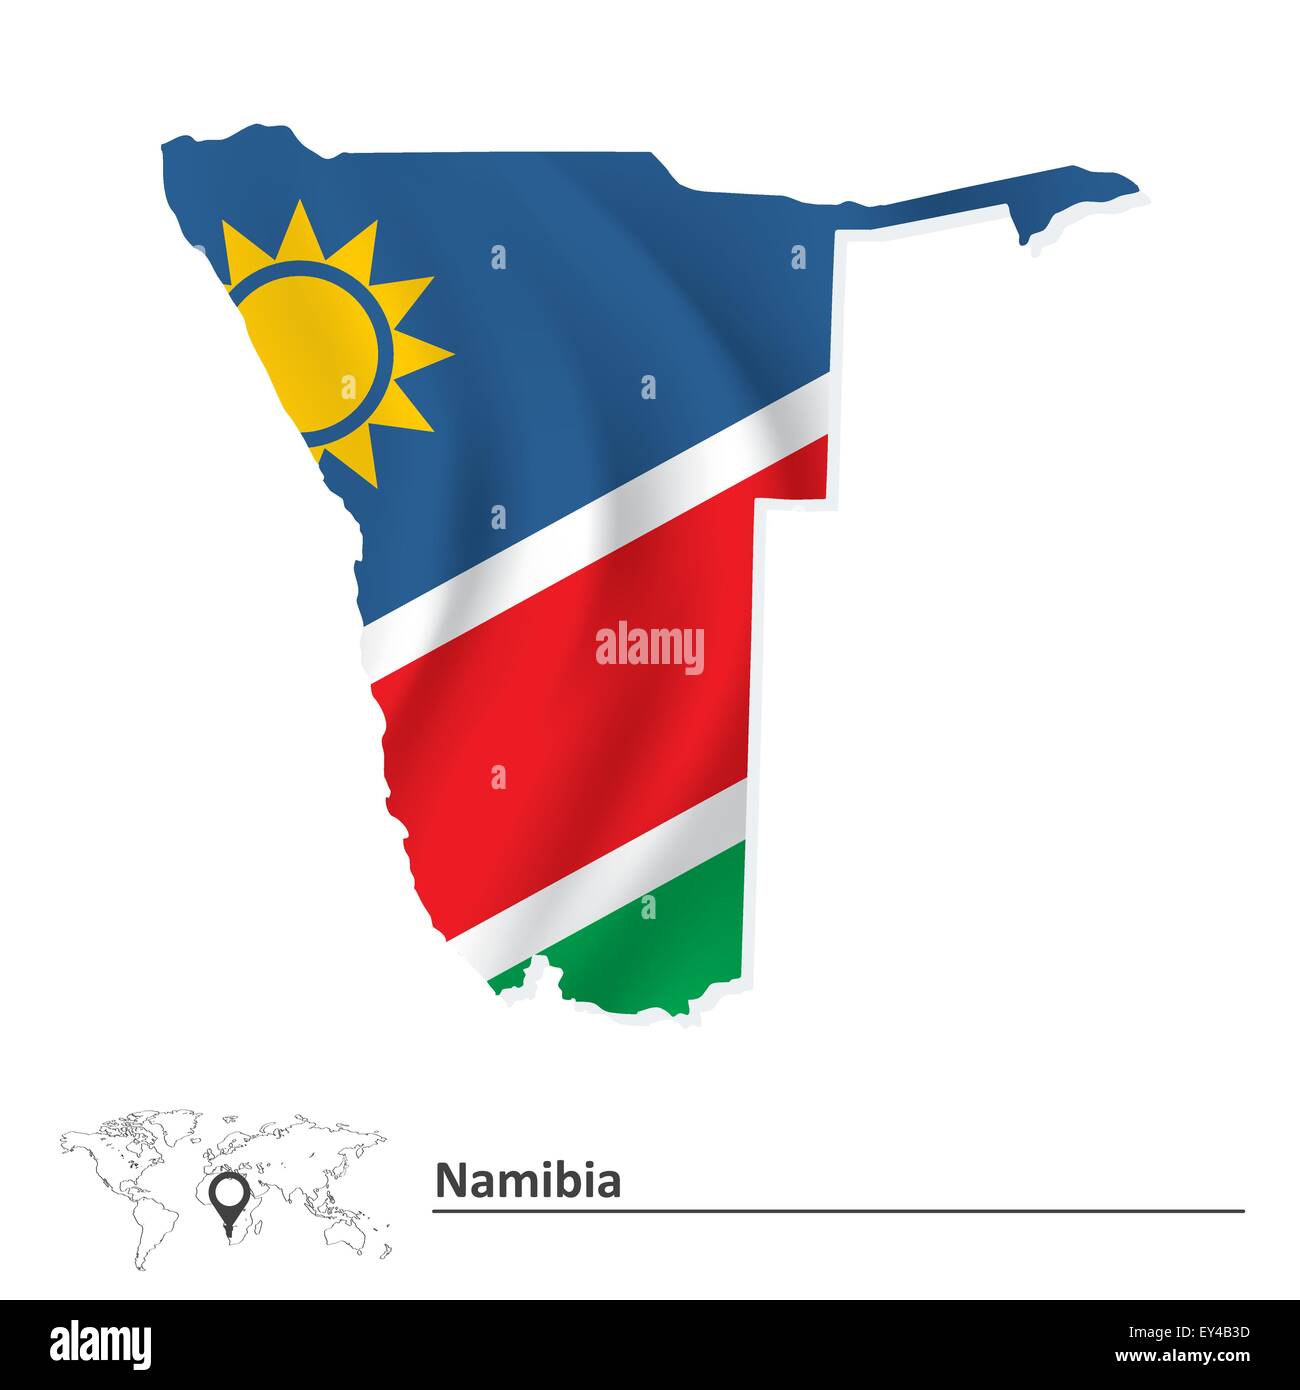 Karte von Namibia mit Fahne - Vektor-illustration Stock Vektor